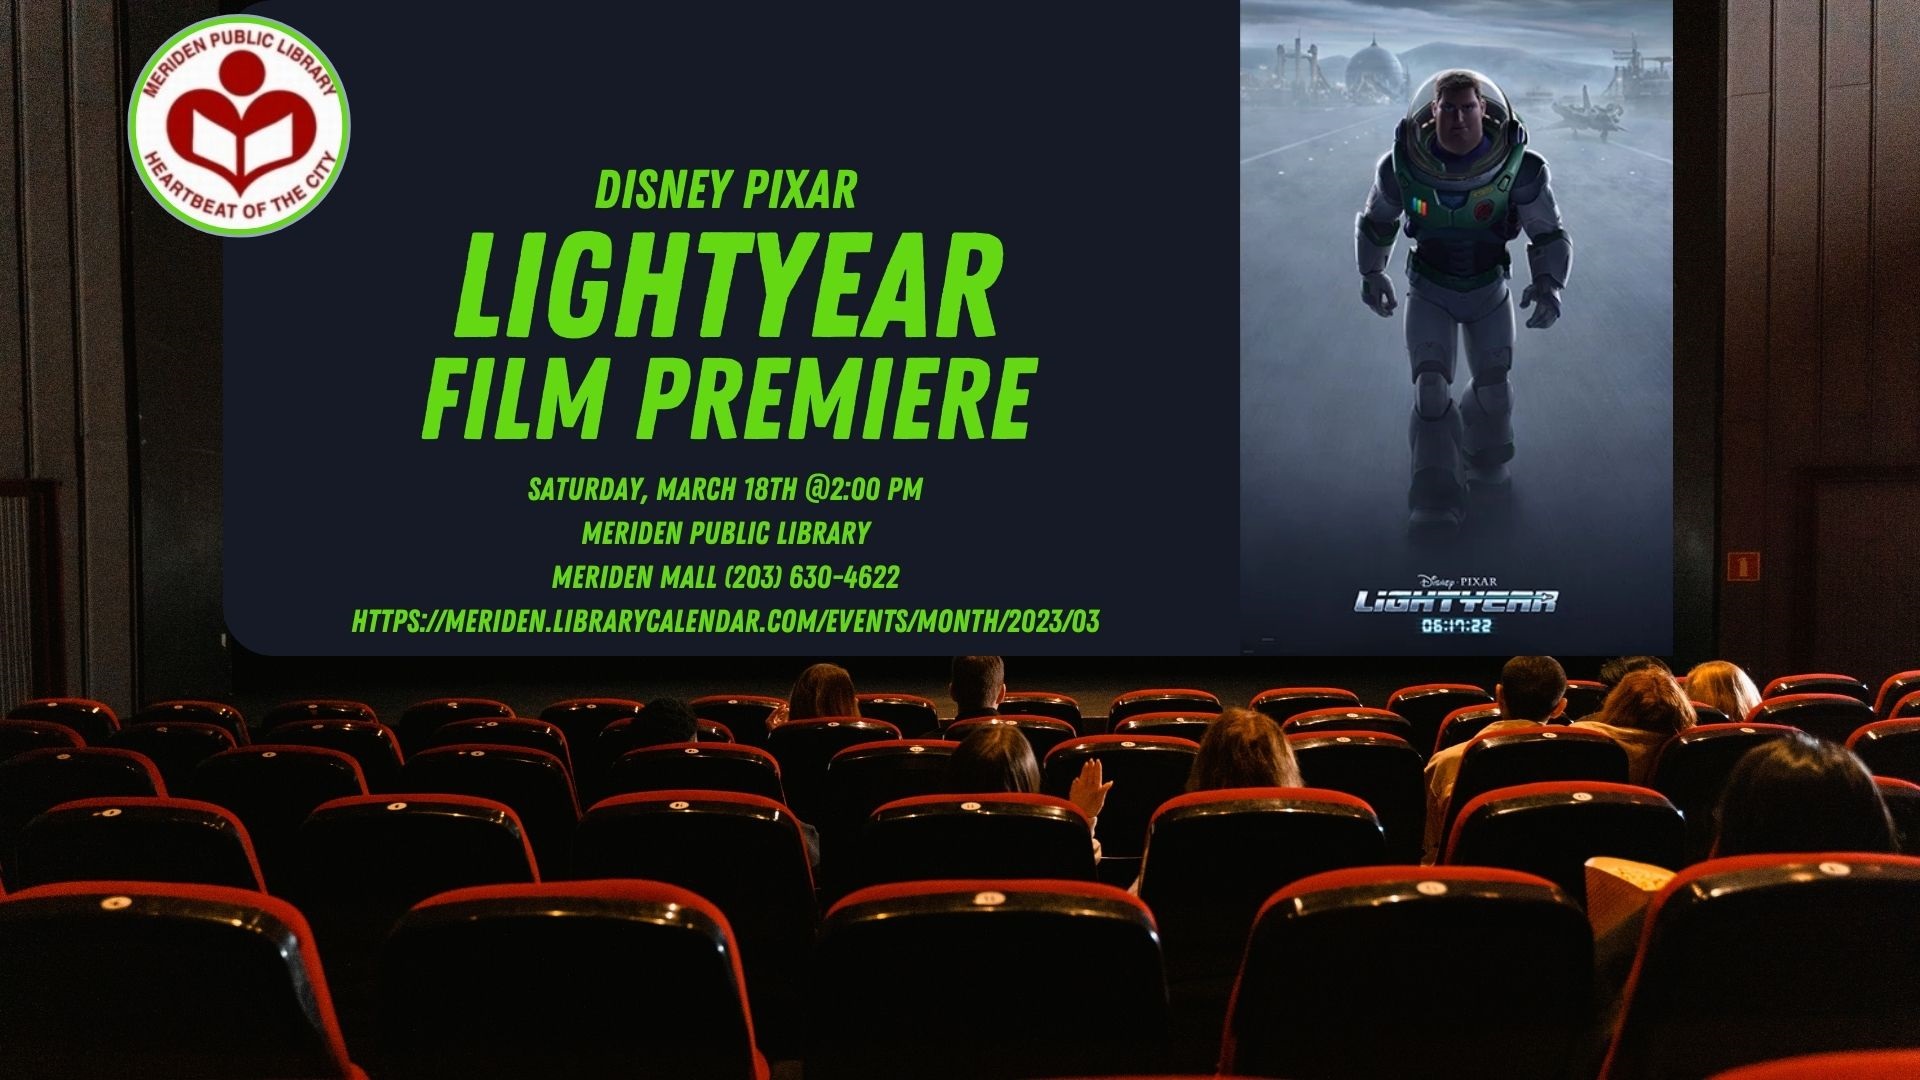 Buzz Lightyear is projected on a screen in a packed movie theater. "Lightyear Film Premier" is written beside him in lime green. 